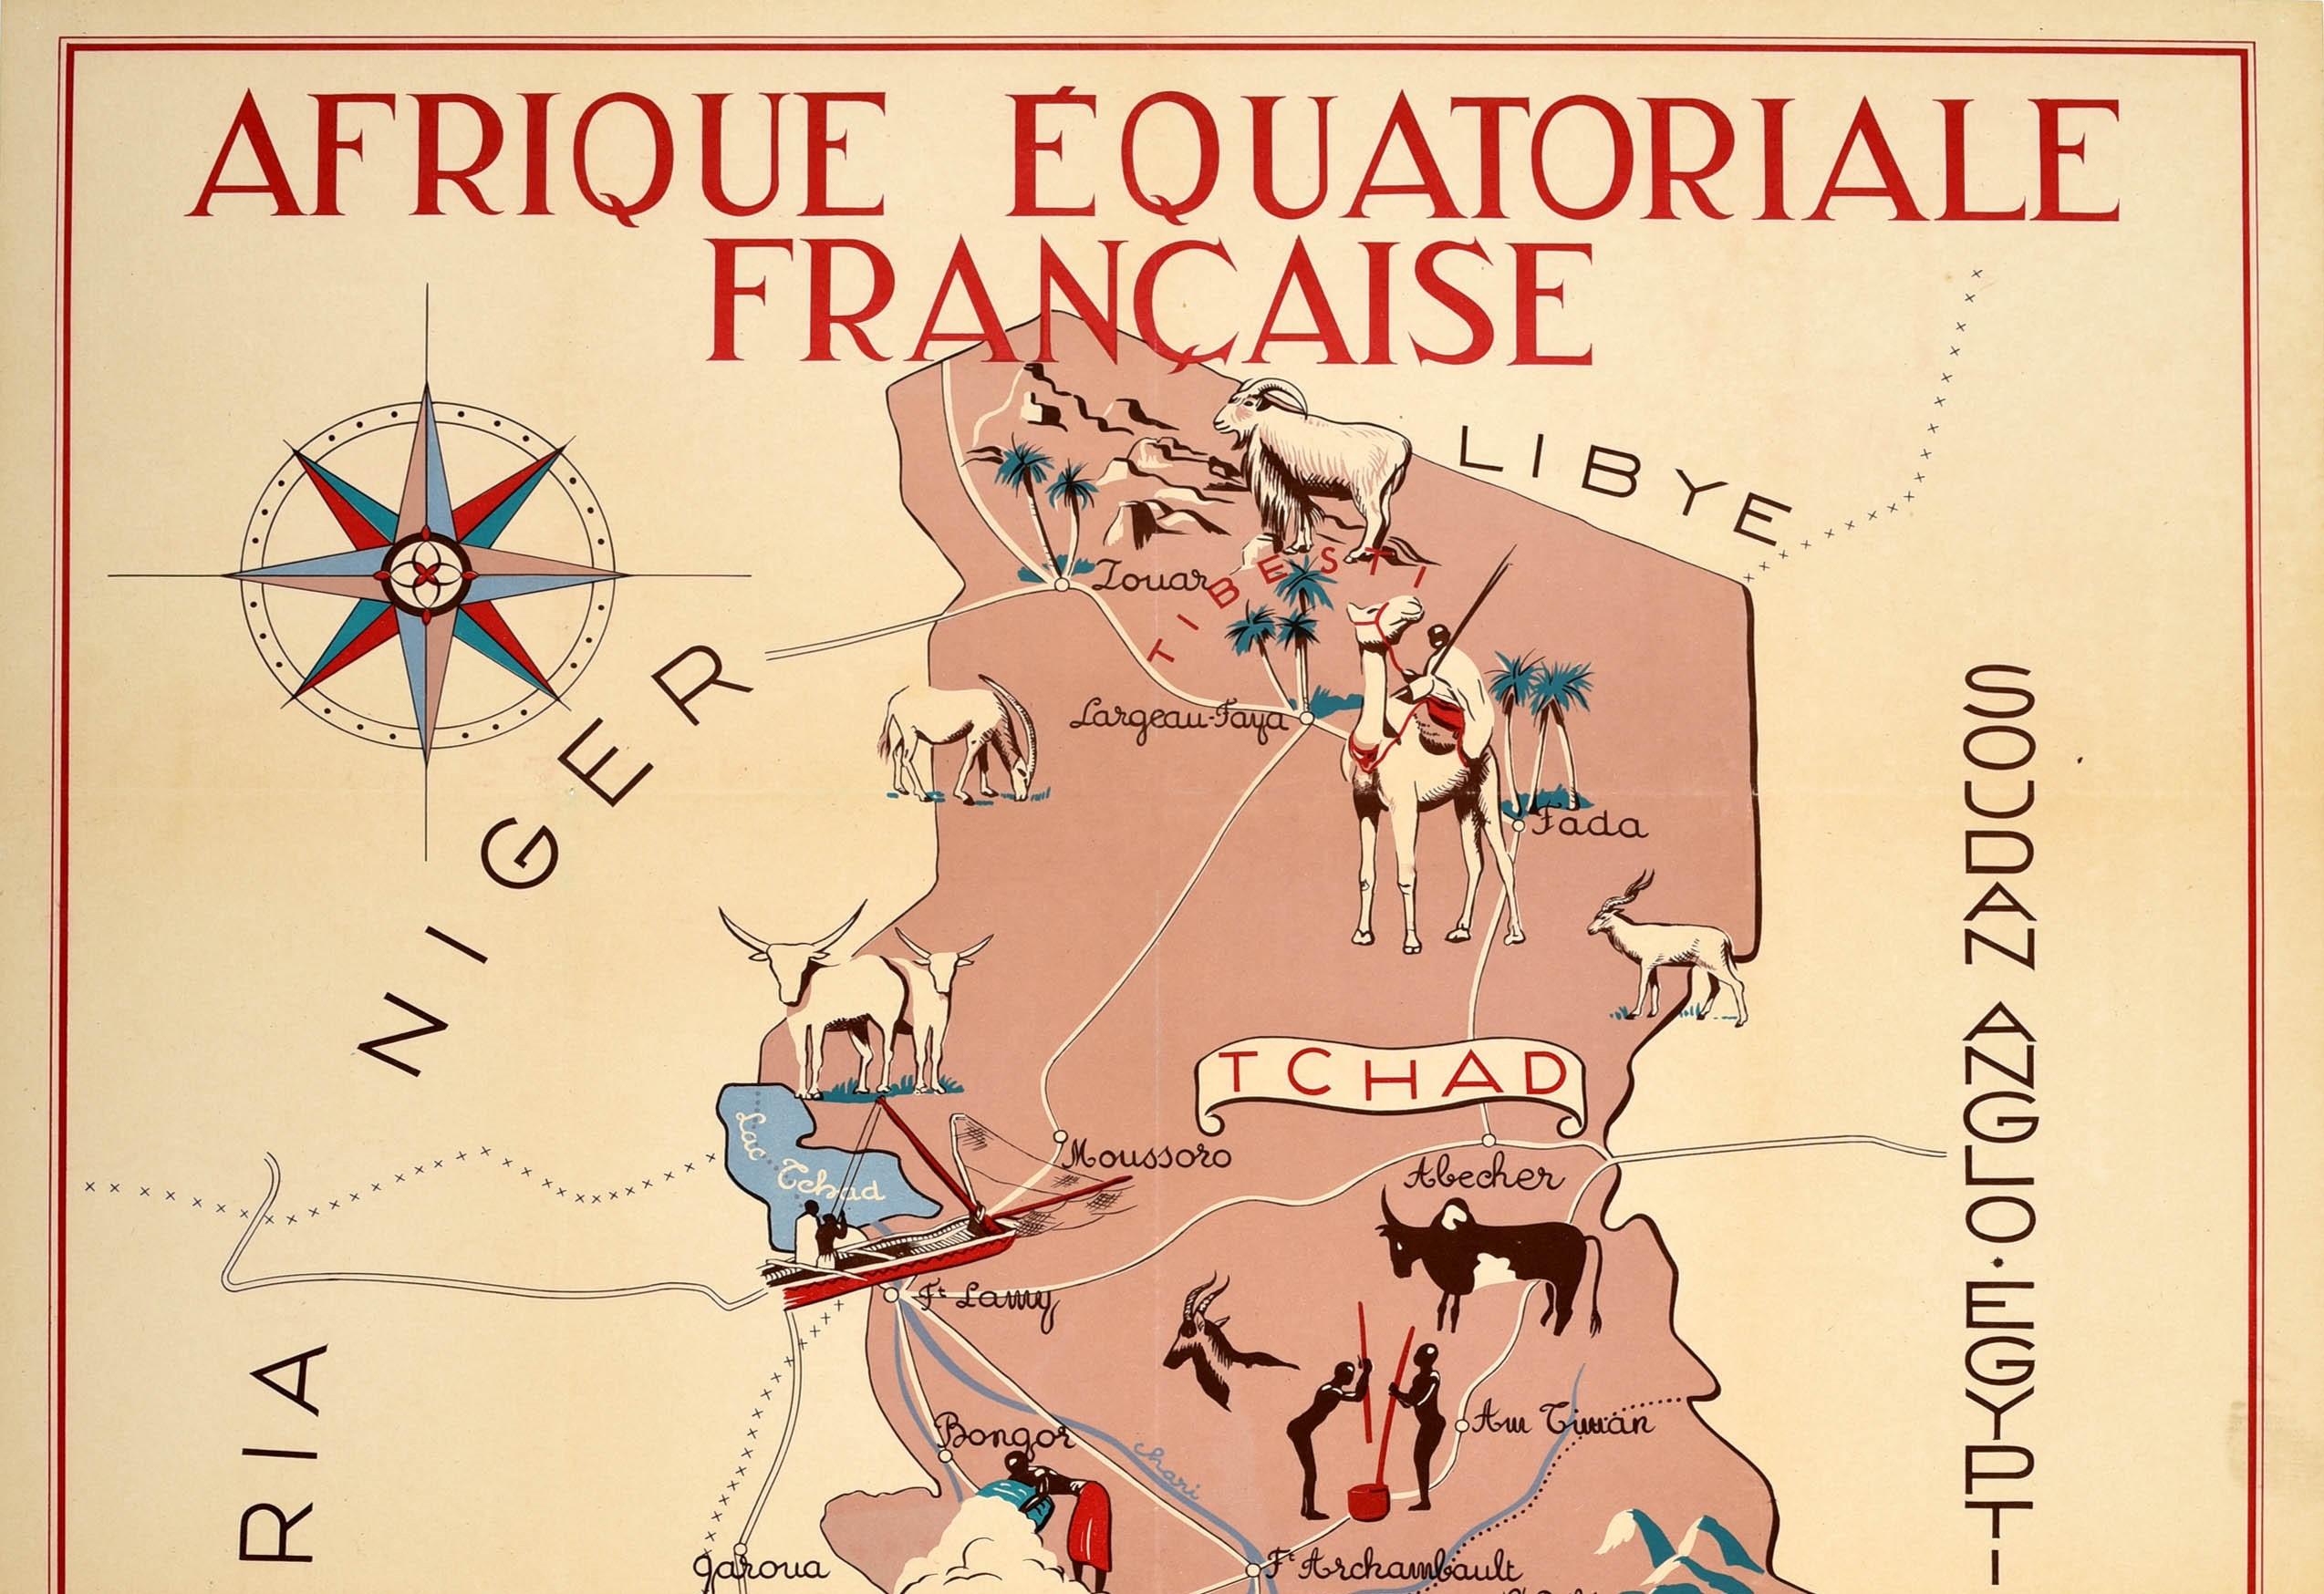 Original Vintage Poster French Equatorial Africa Map Afrique Chad Congo Francais - Print by J. Choain Audiberti